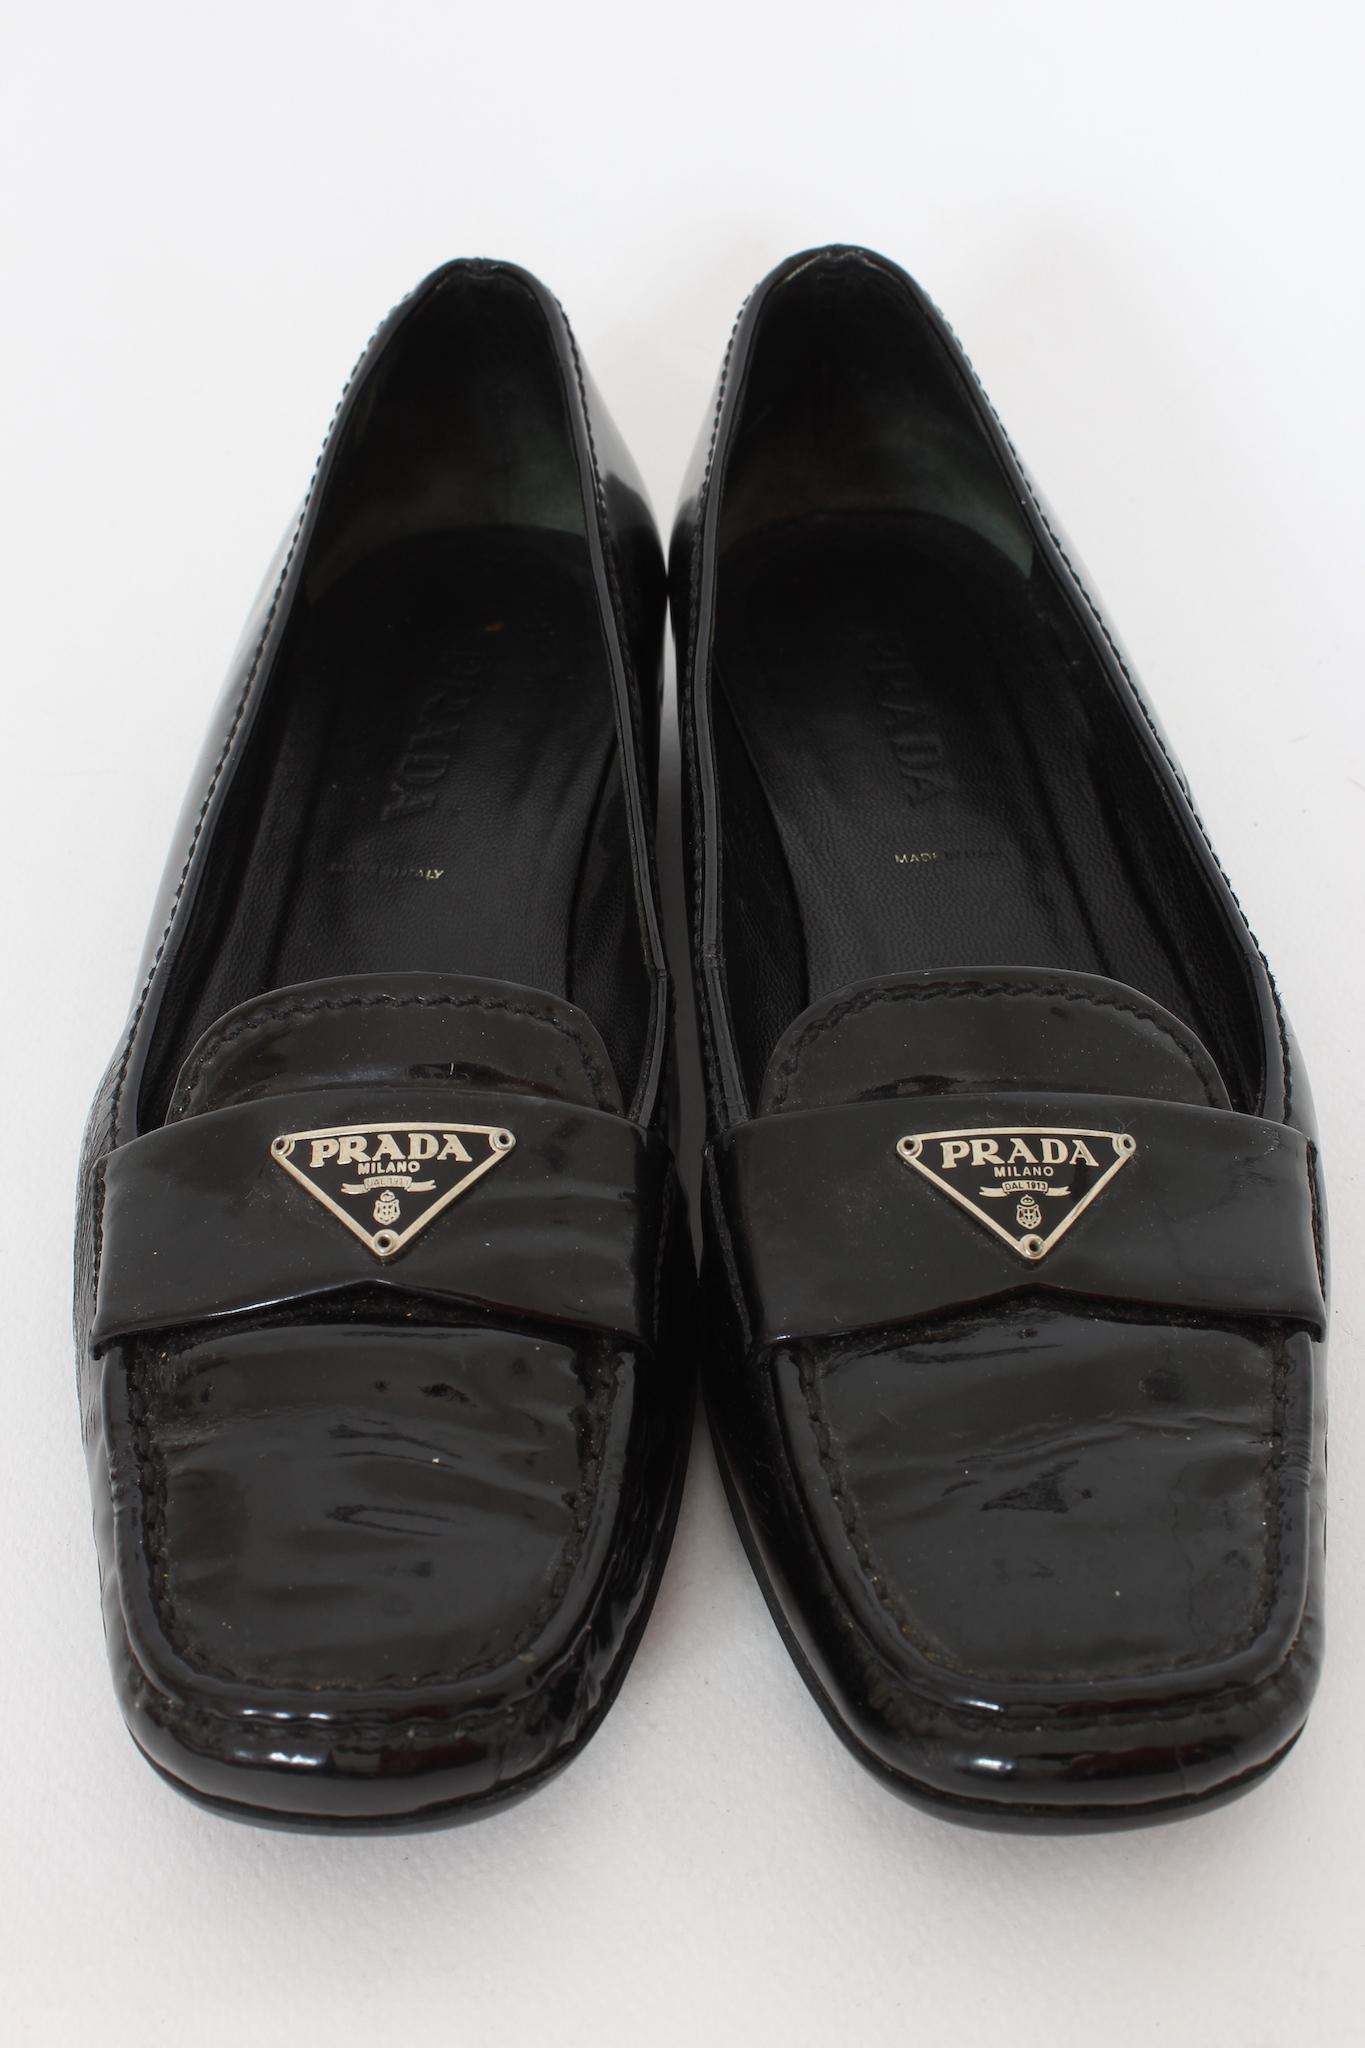 Prada Black Patent Leather Vintage Moccasins Shoes 90s 1